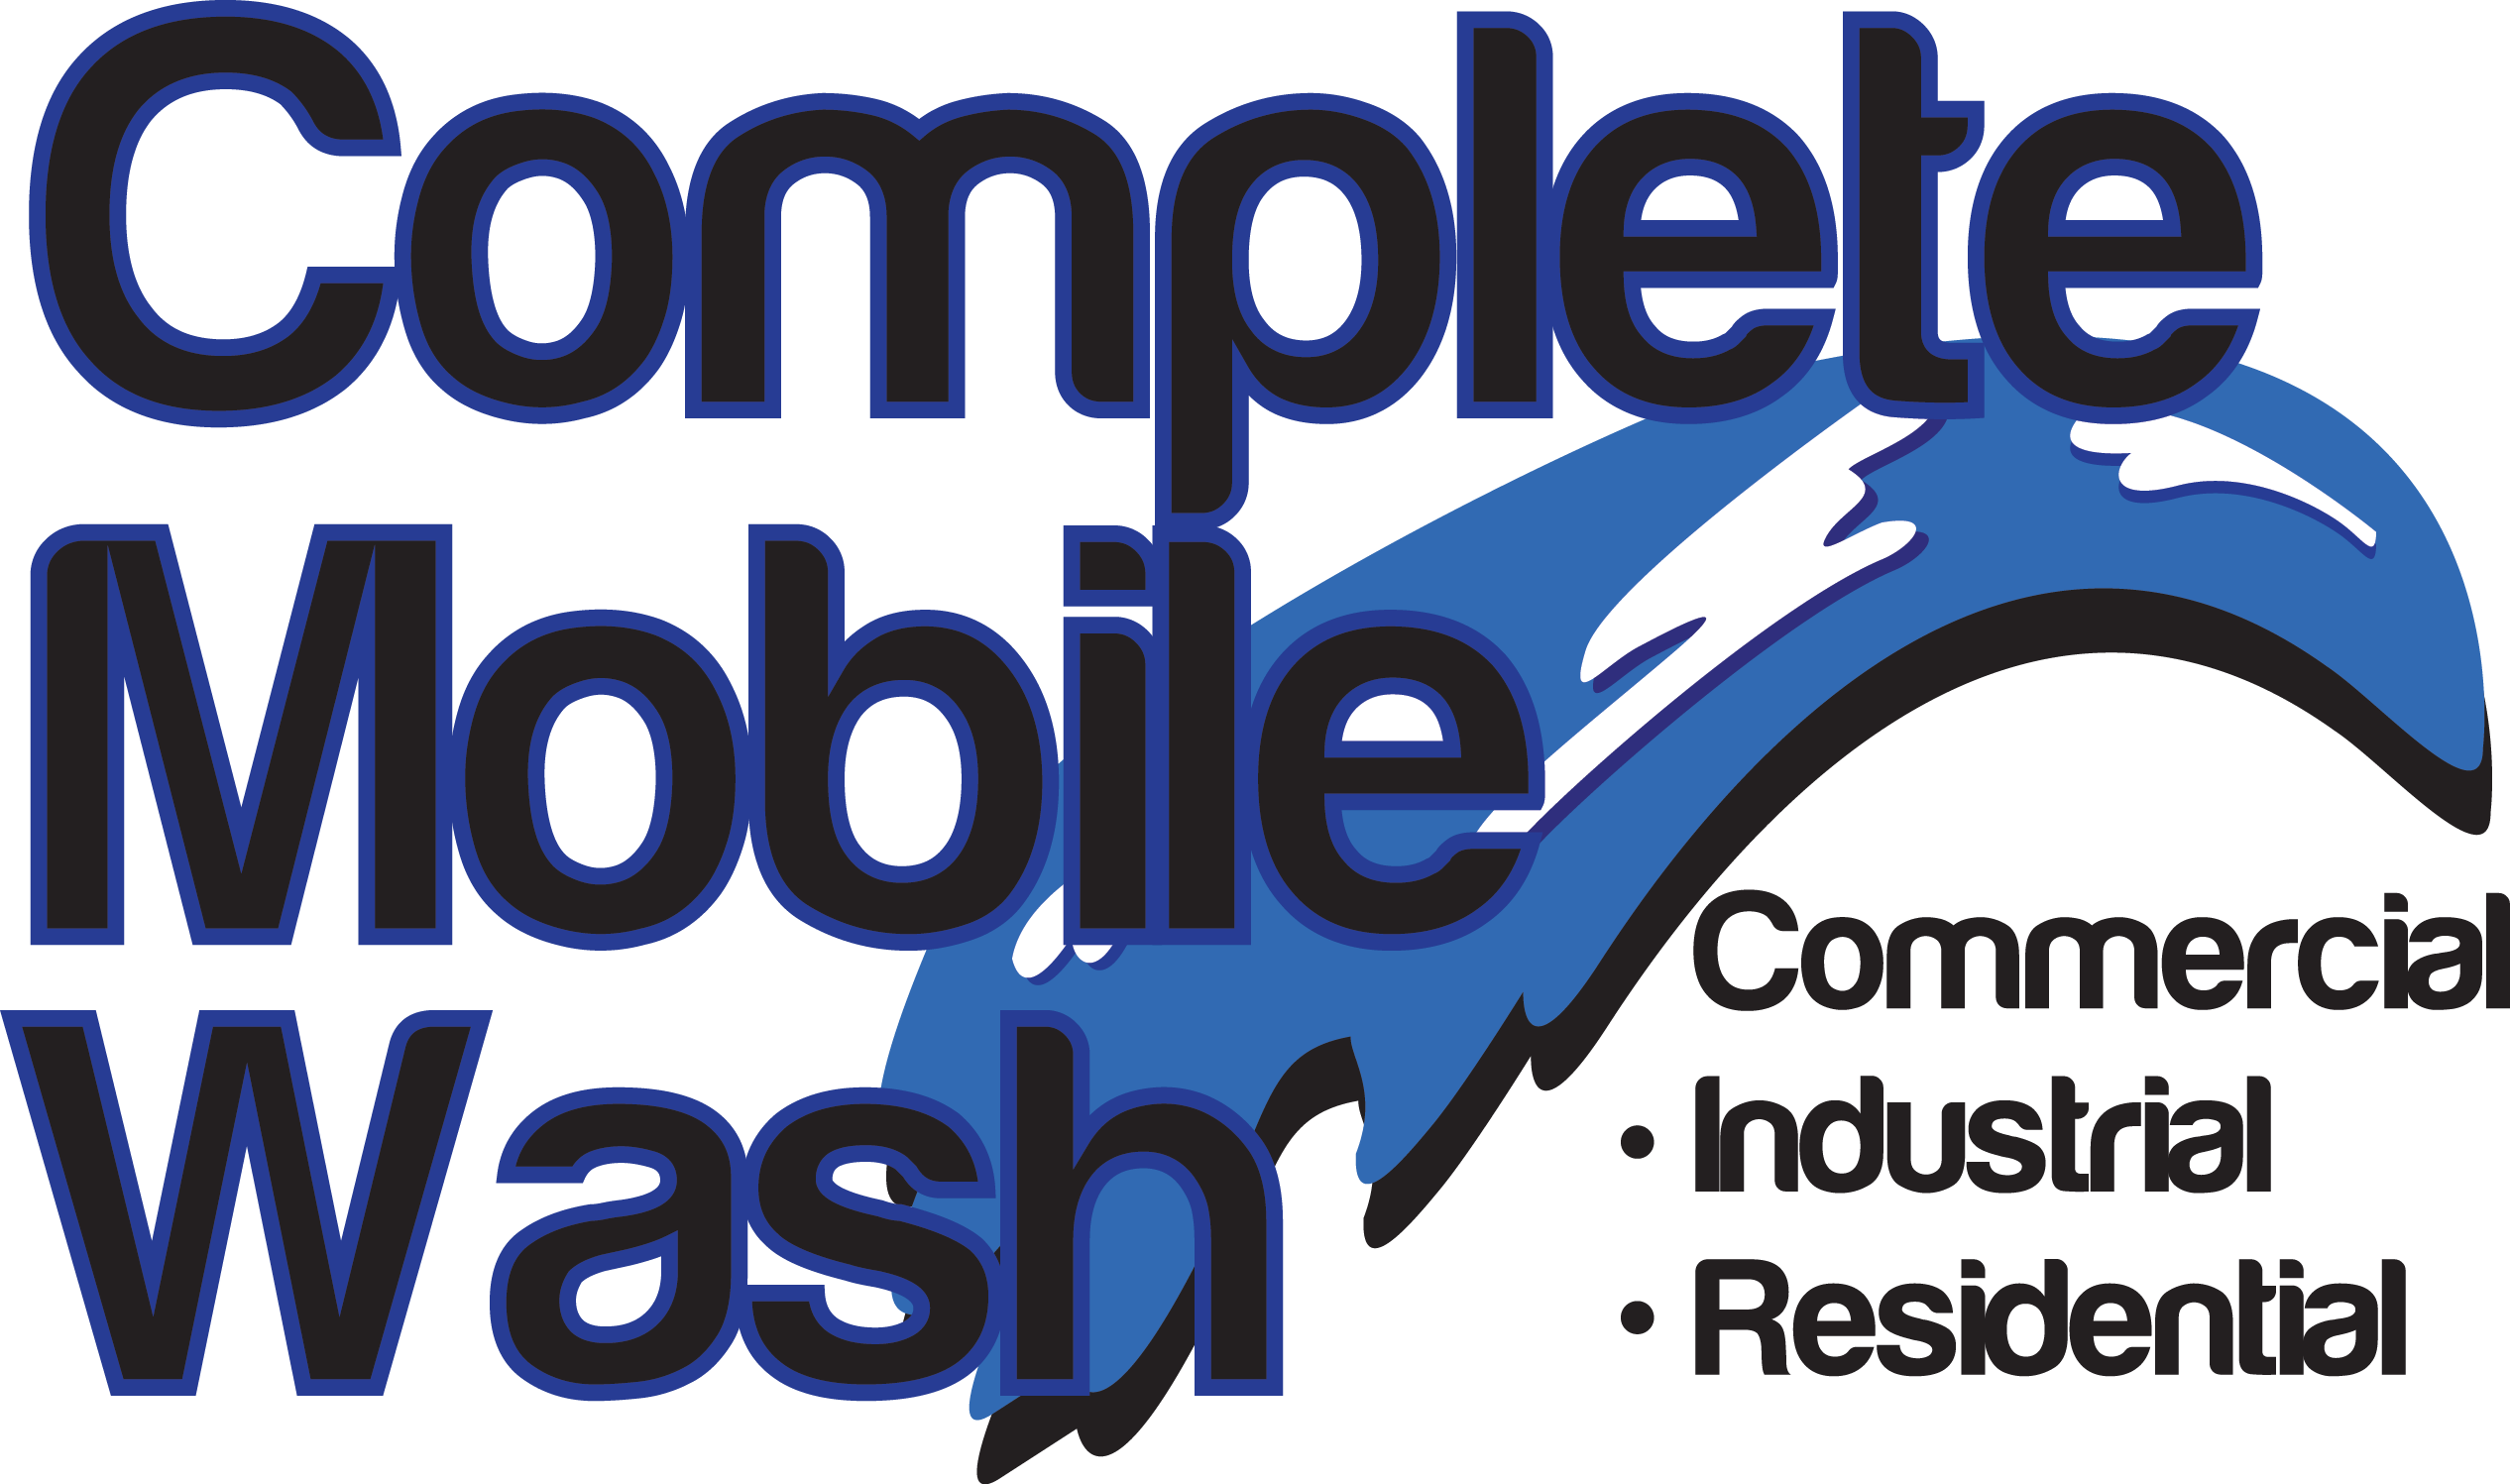 Complete Mobile Wash